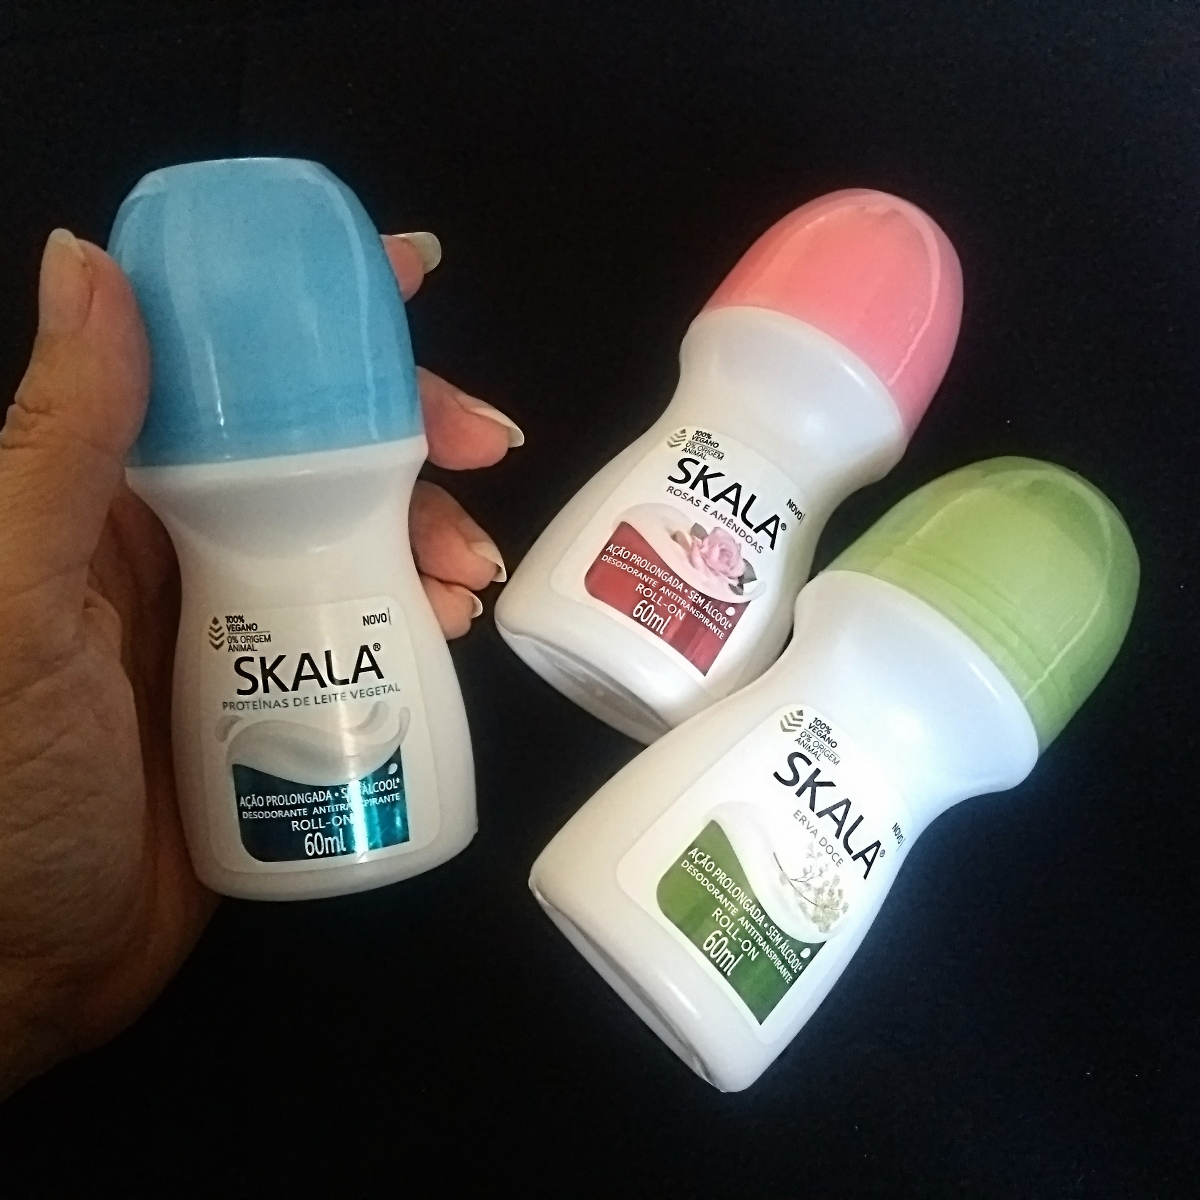 Skala Desodorante Antitranspirante Reviews | abillion